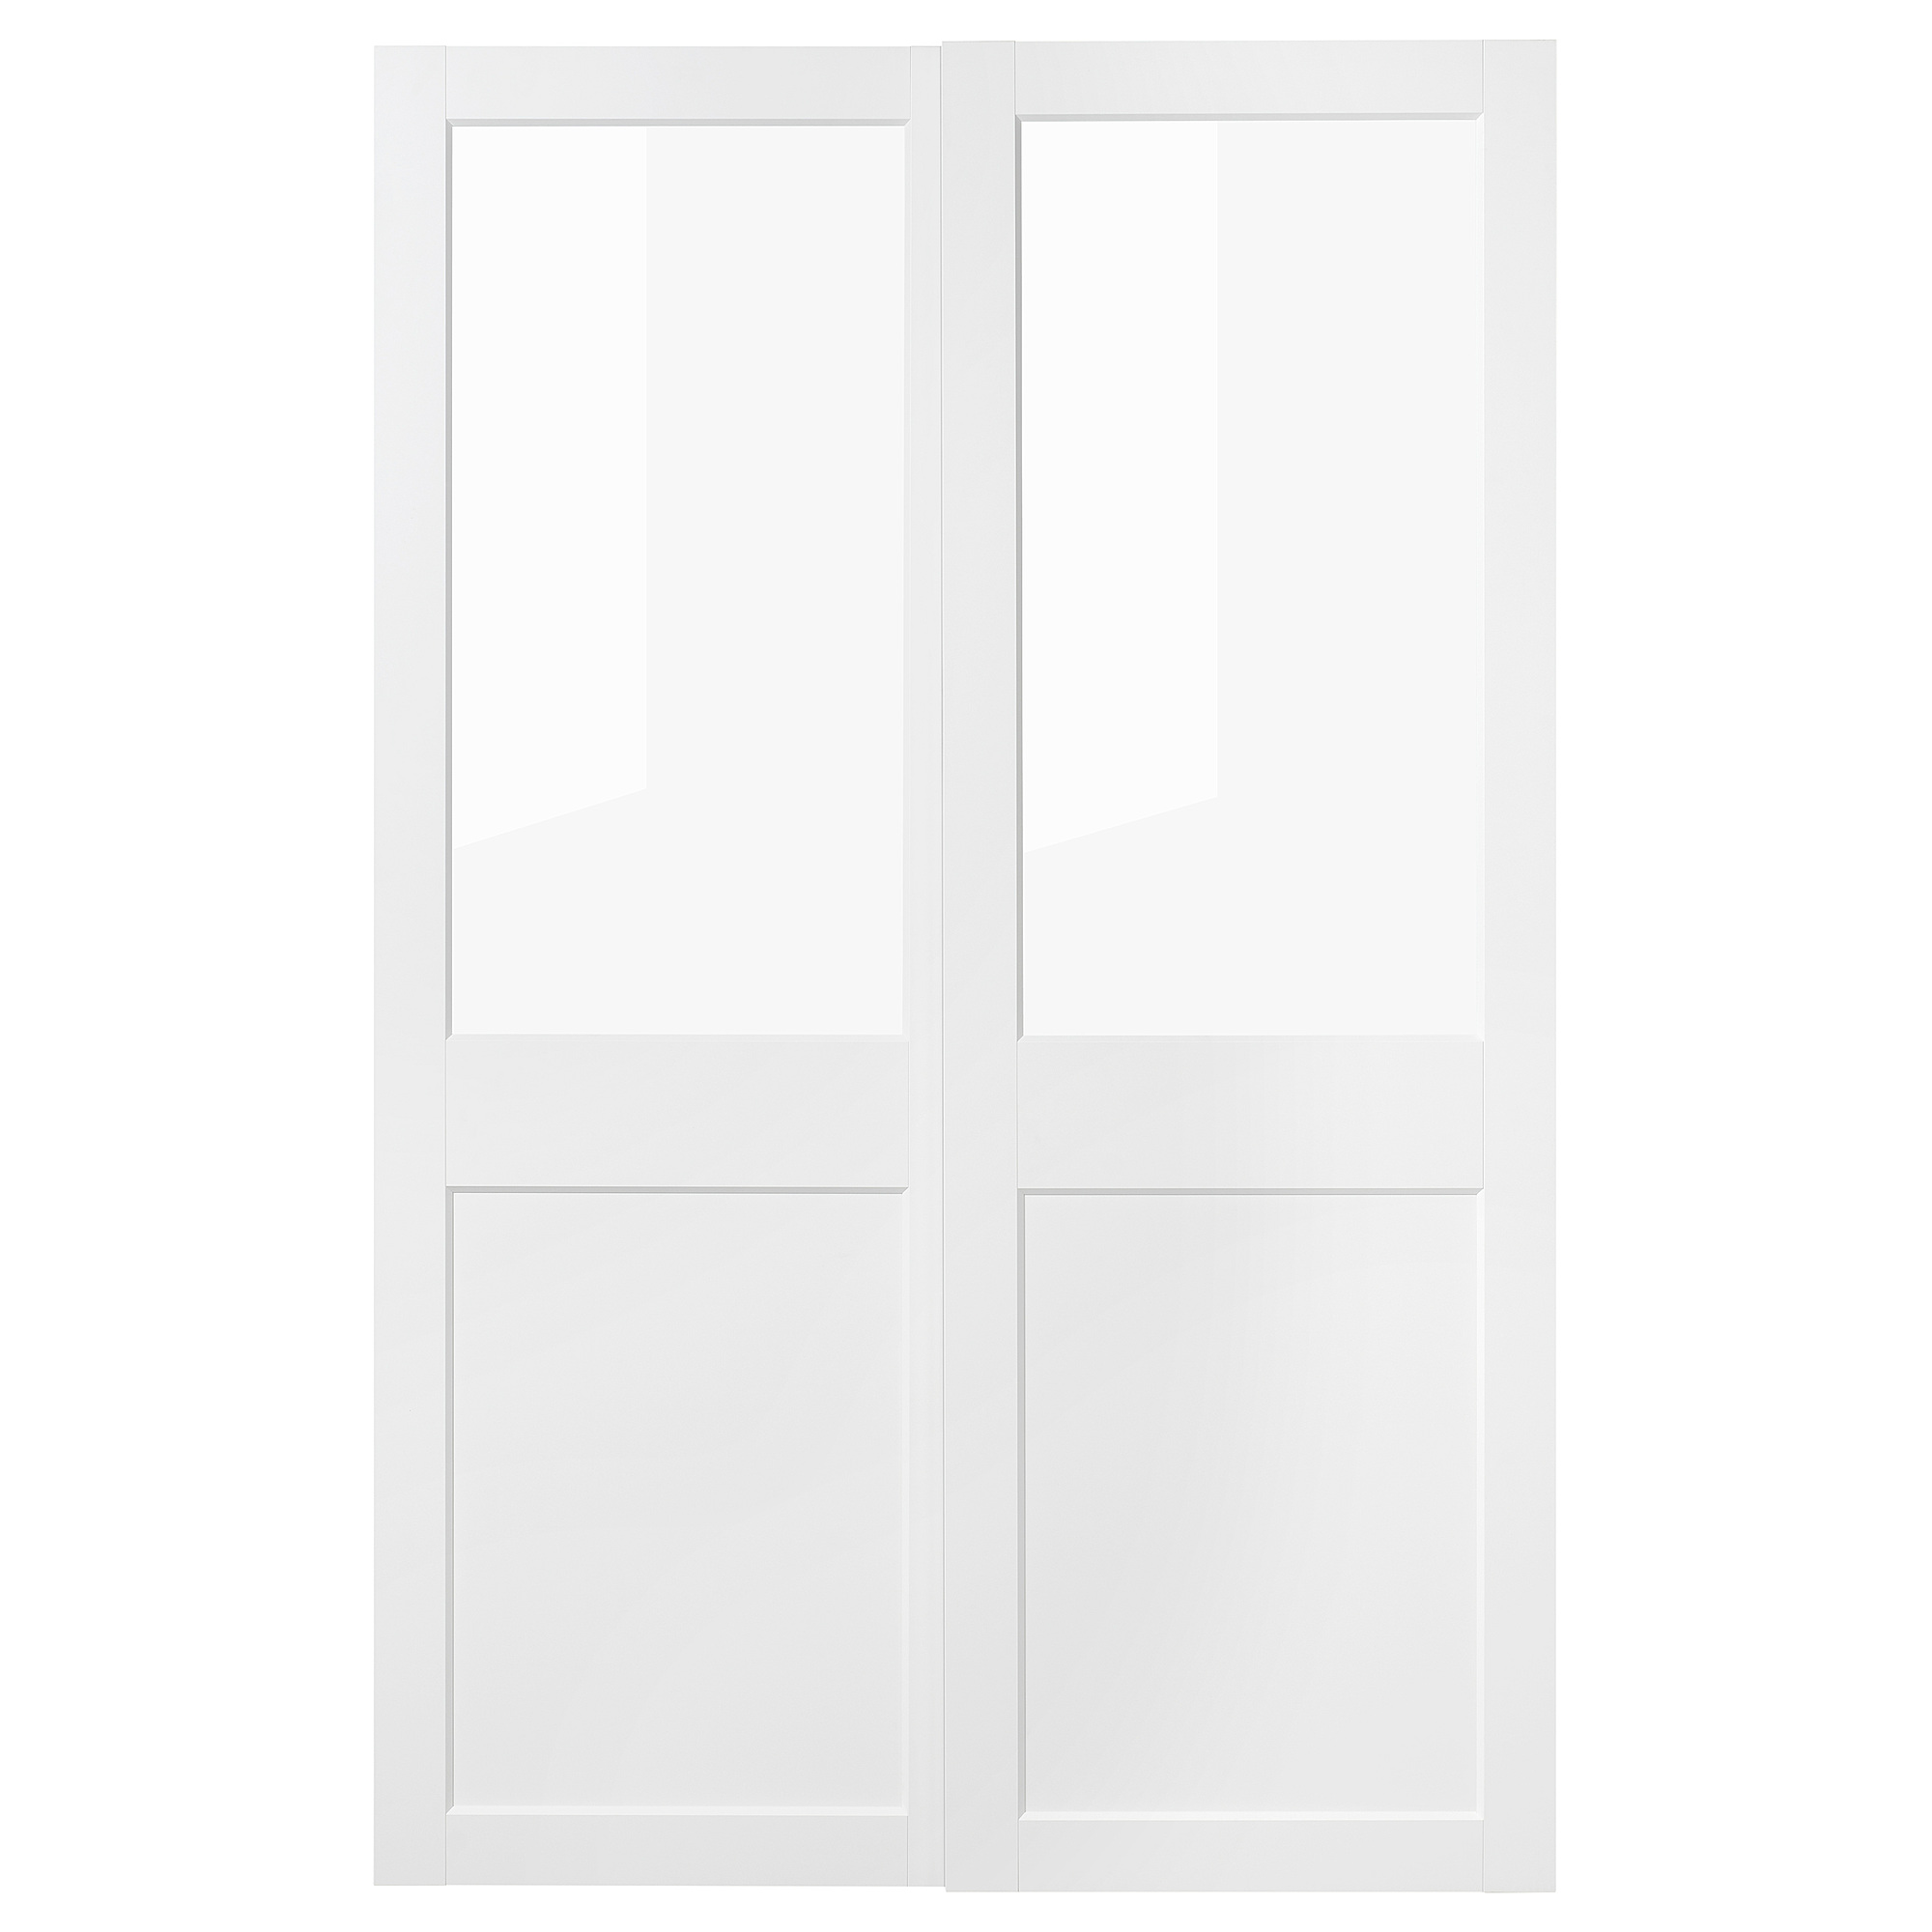 GRIMO pair of sliding doors